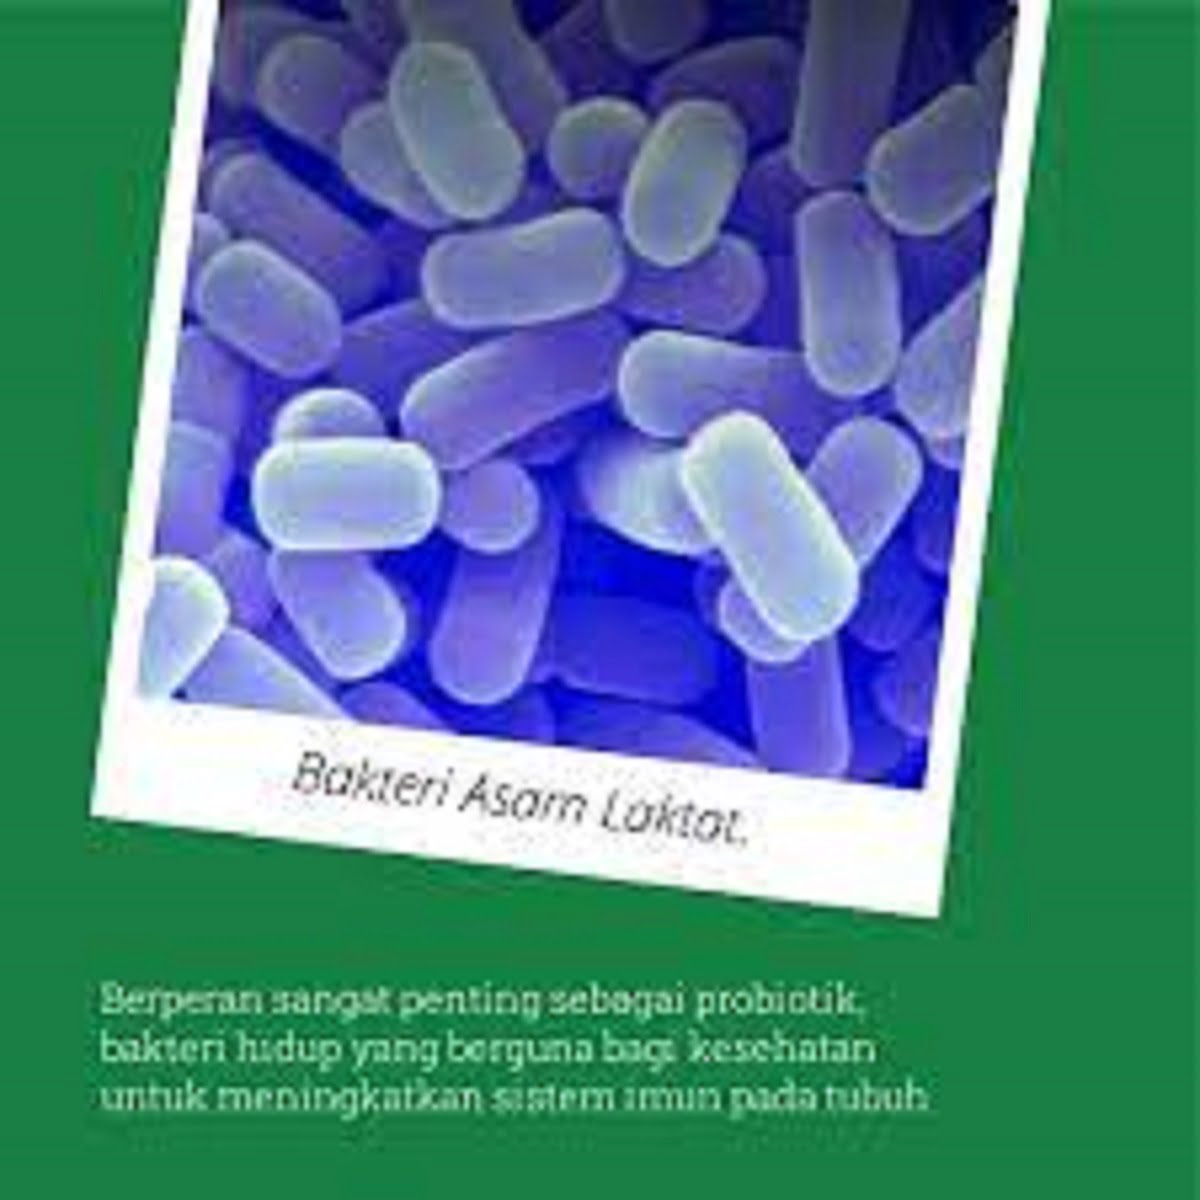 Bakteri asam laktat